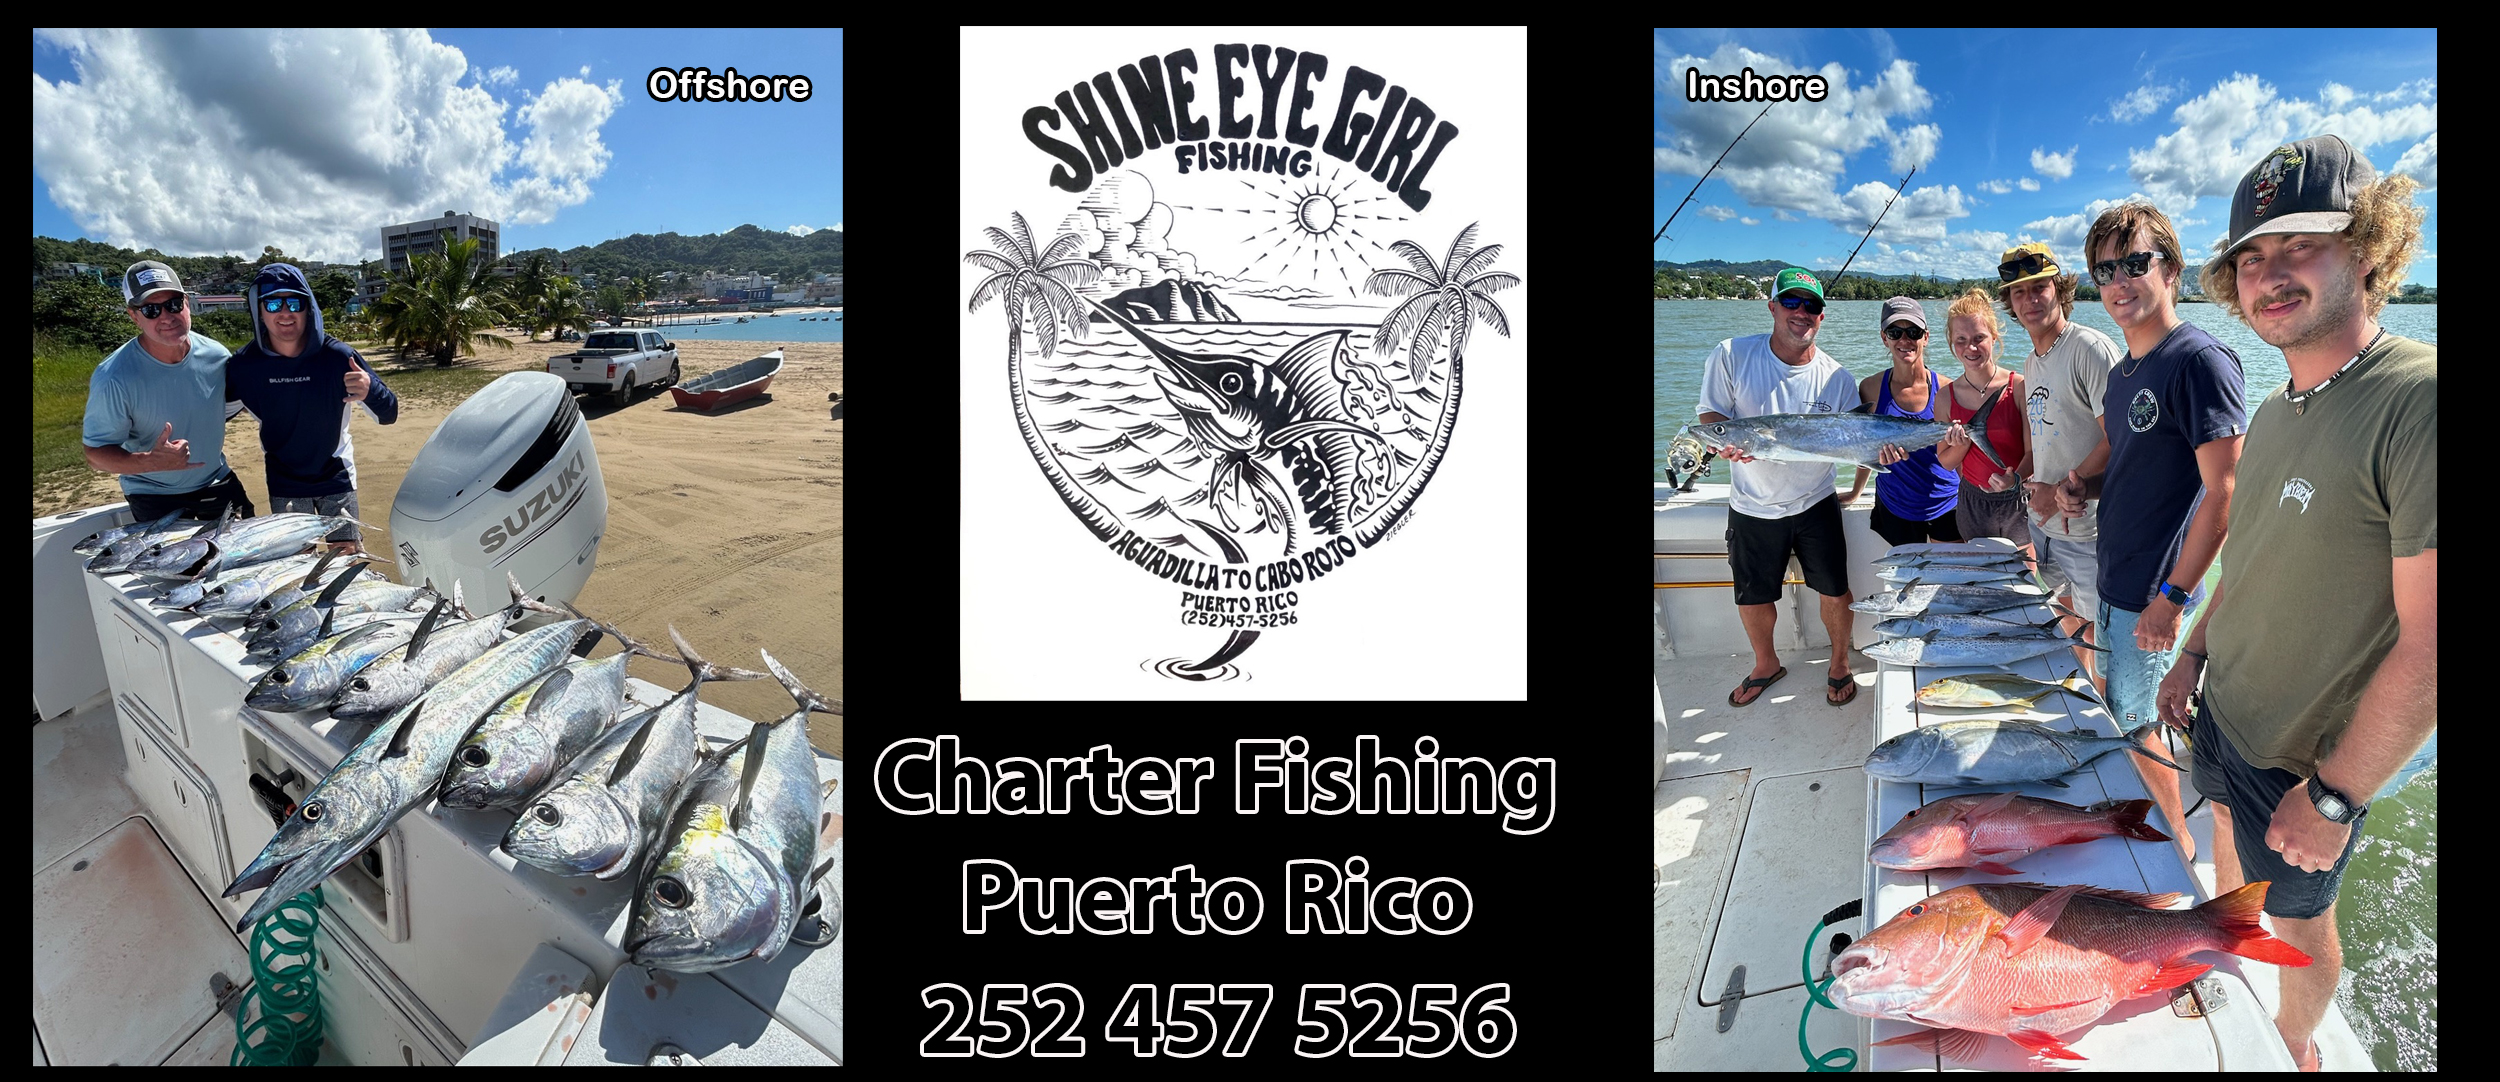 inshore and offshore Fishing Charters Puerto Rico, Shine Eye Girl Charters